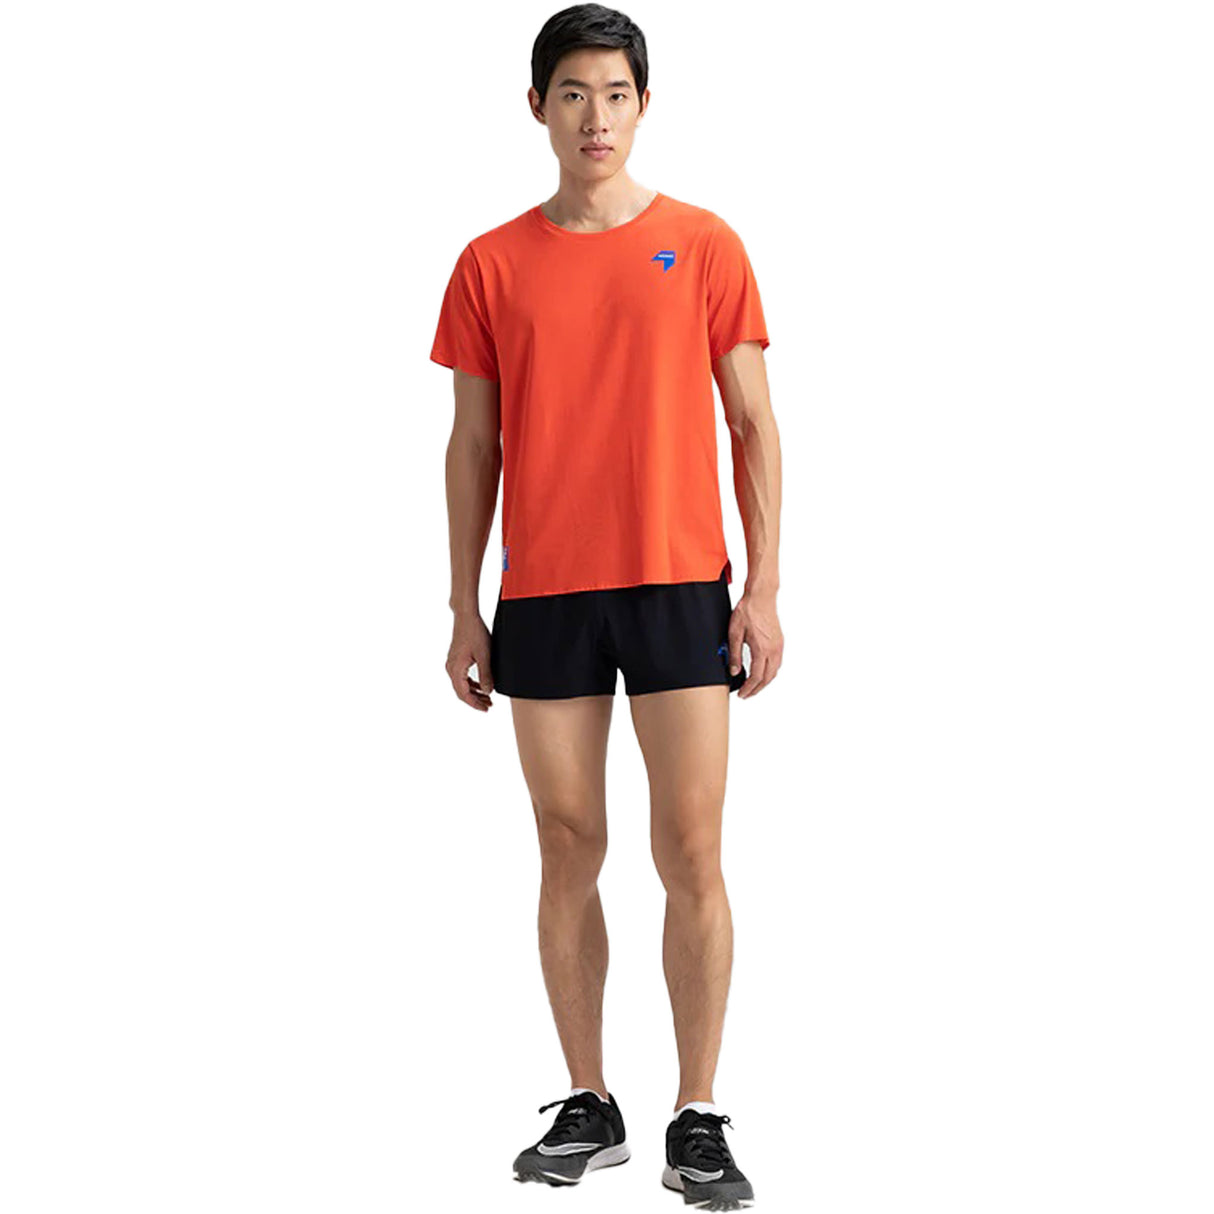 Nedao Men's QiFlow Running T-Shirt V3.0